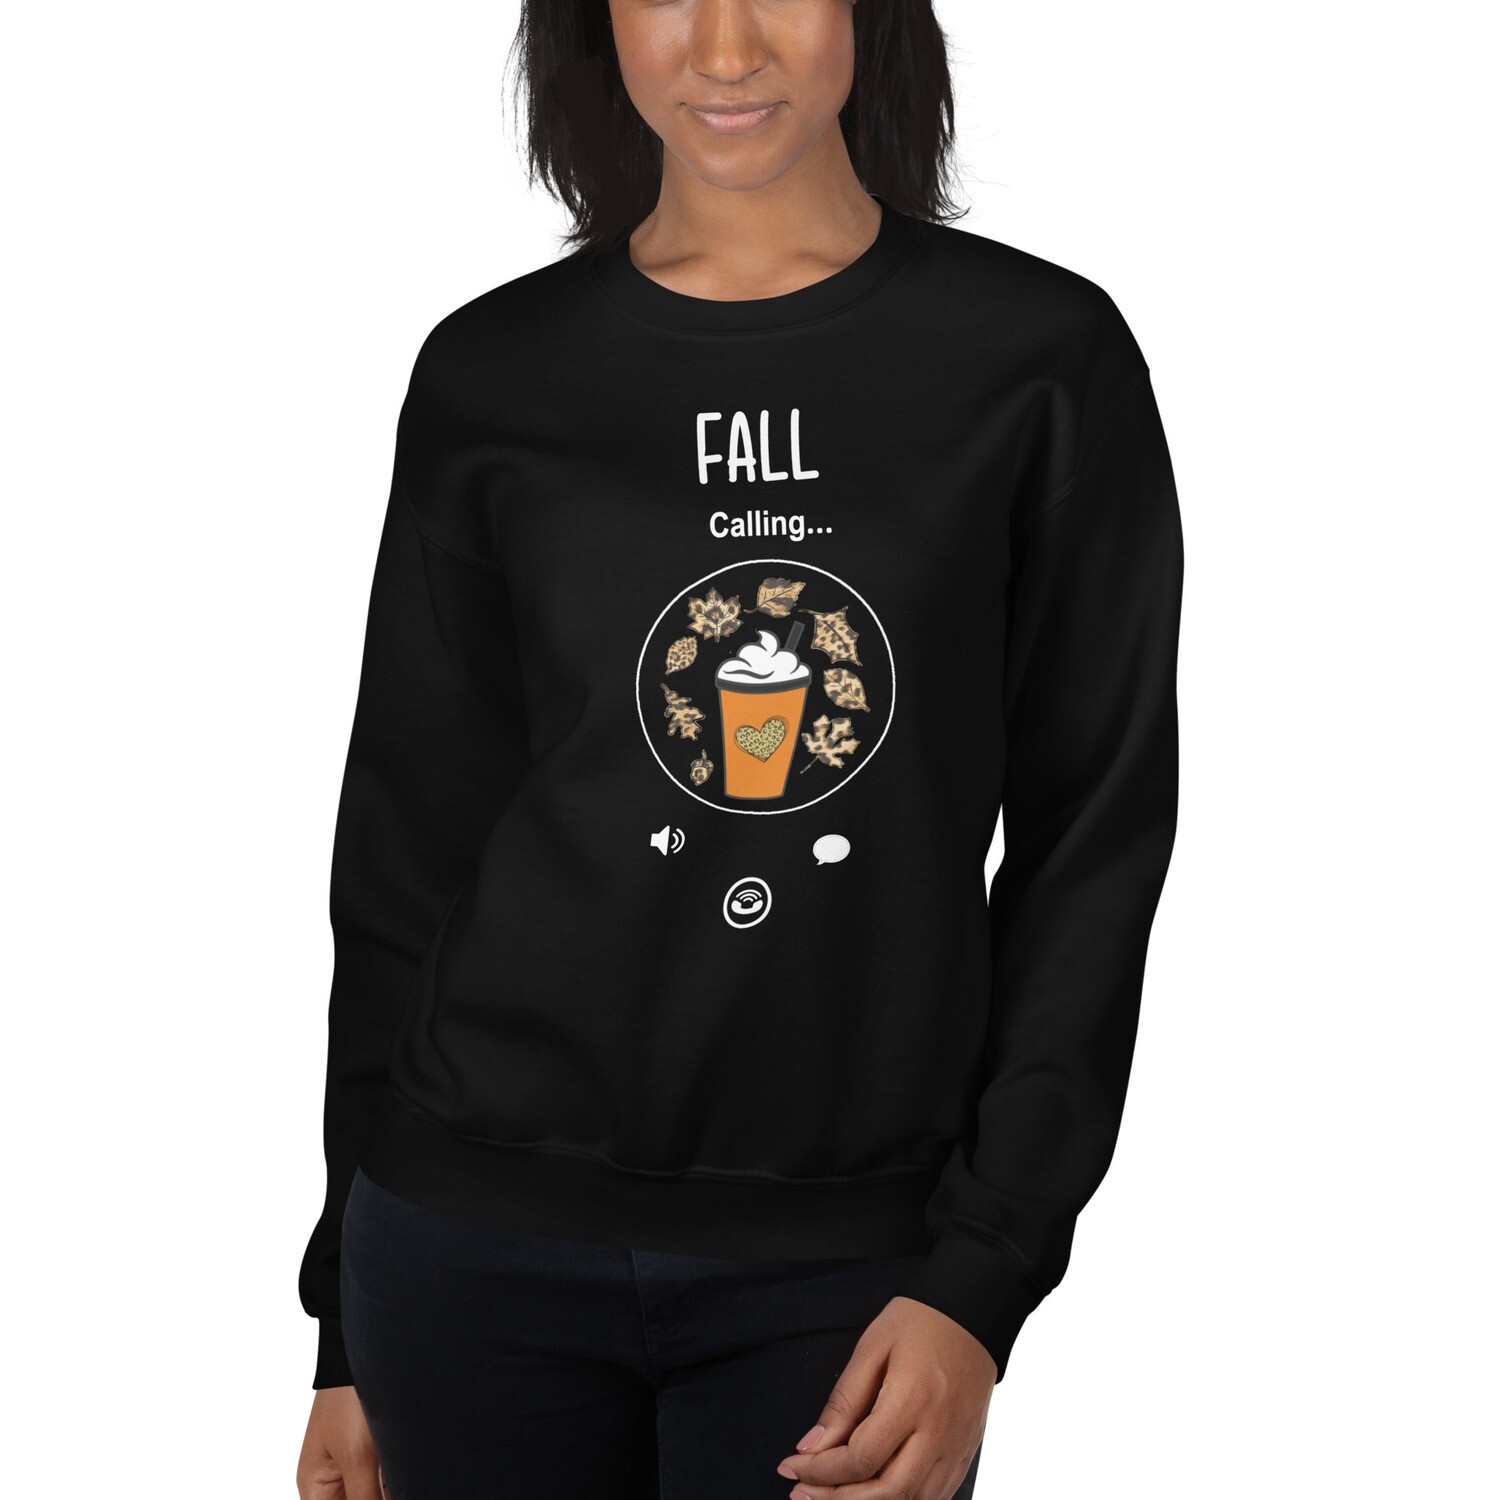 Calling Fall Women's Crewneck Sweatshirt